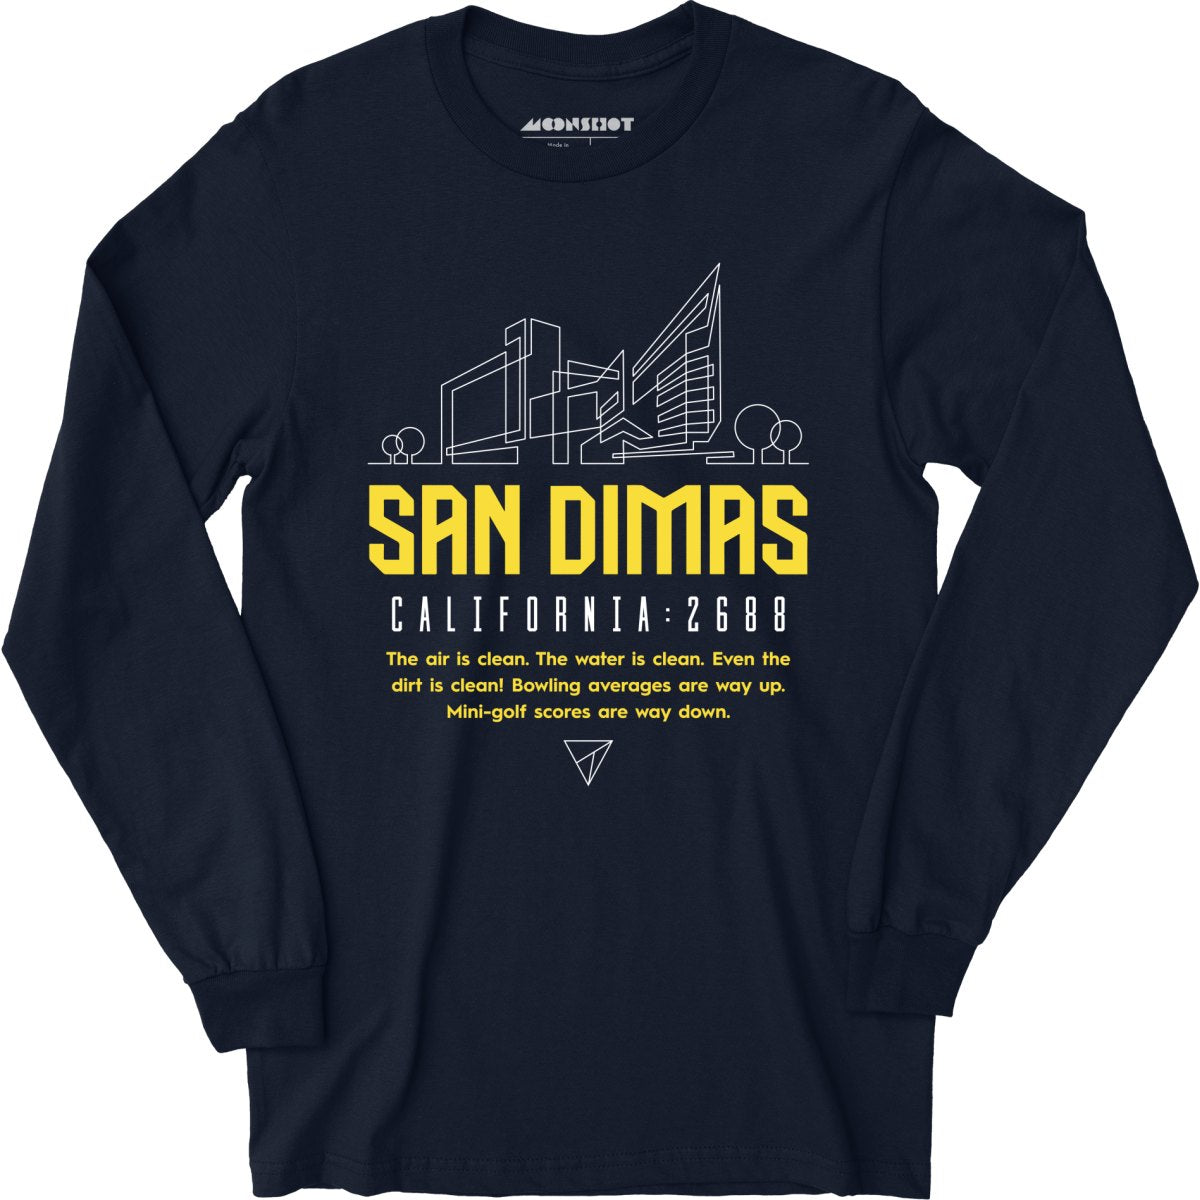 San Dimas 2688 - Bill & Ted's Excellent Adventure - Long Sleeve T-Shirt